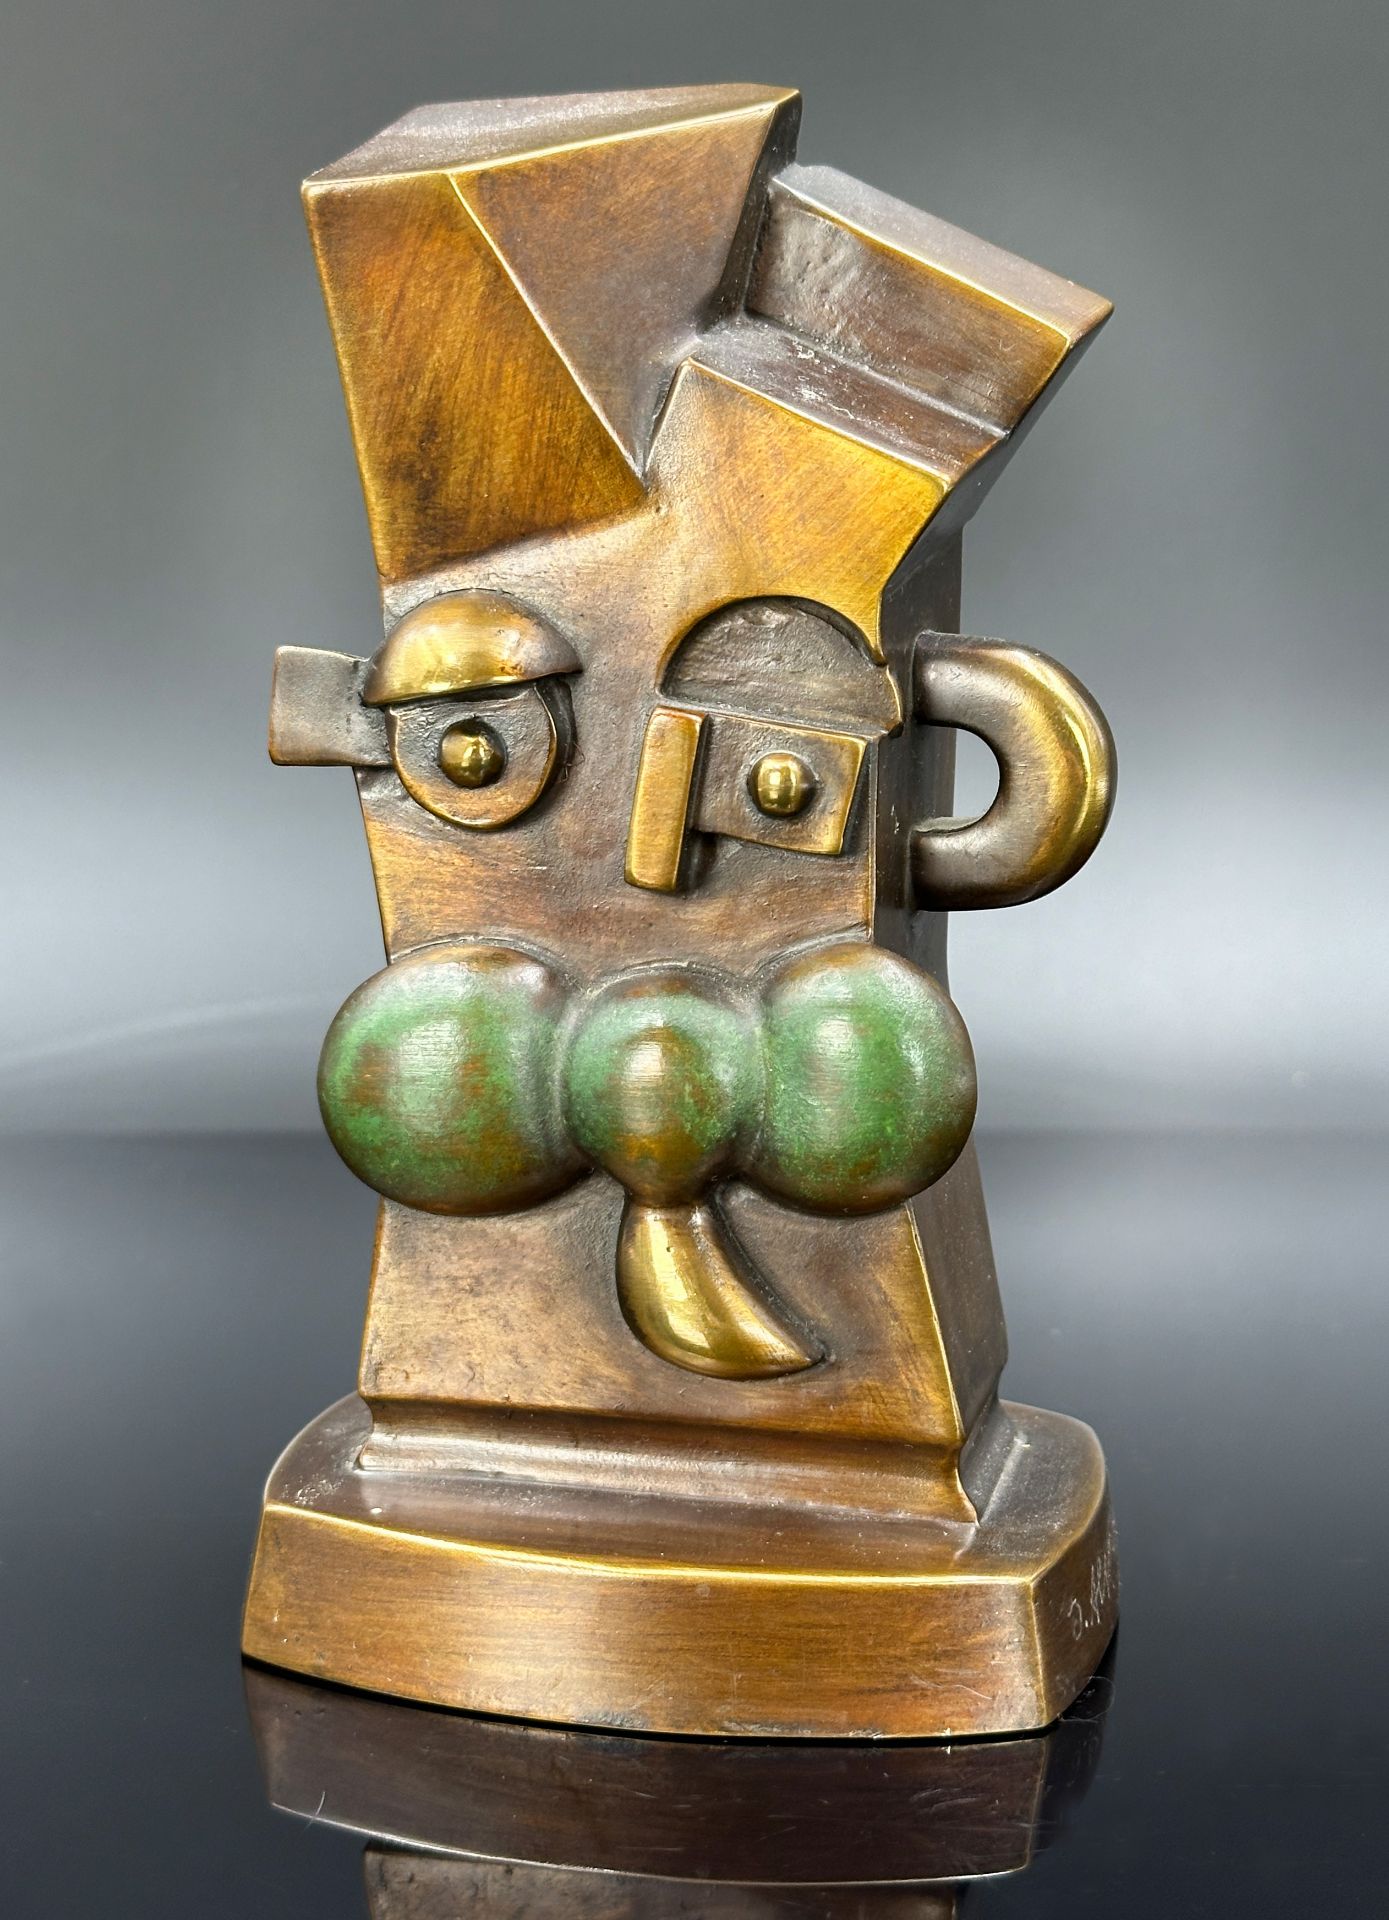 Otmar ALT (1940). Bronze. "The watchman". 2005.